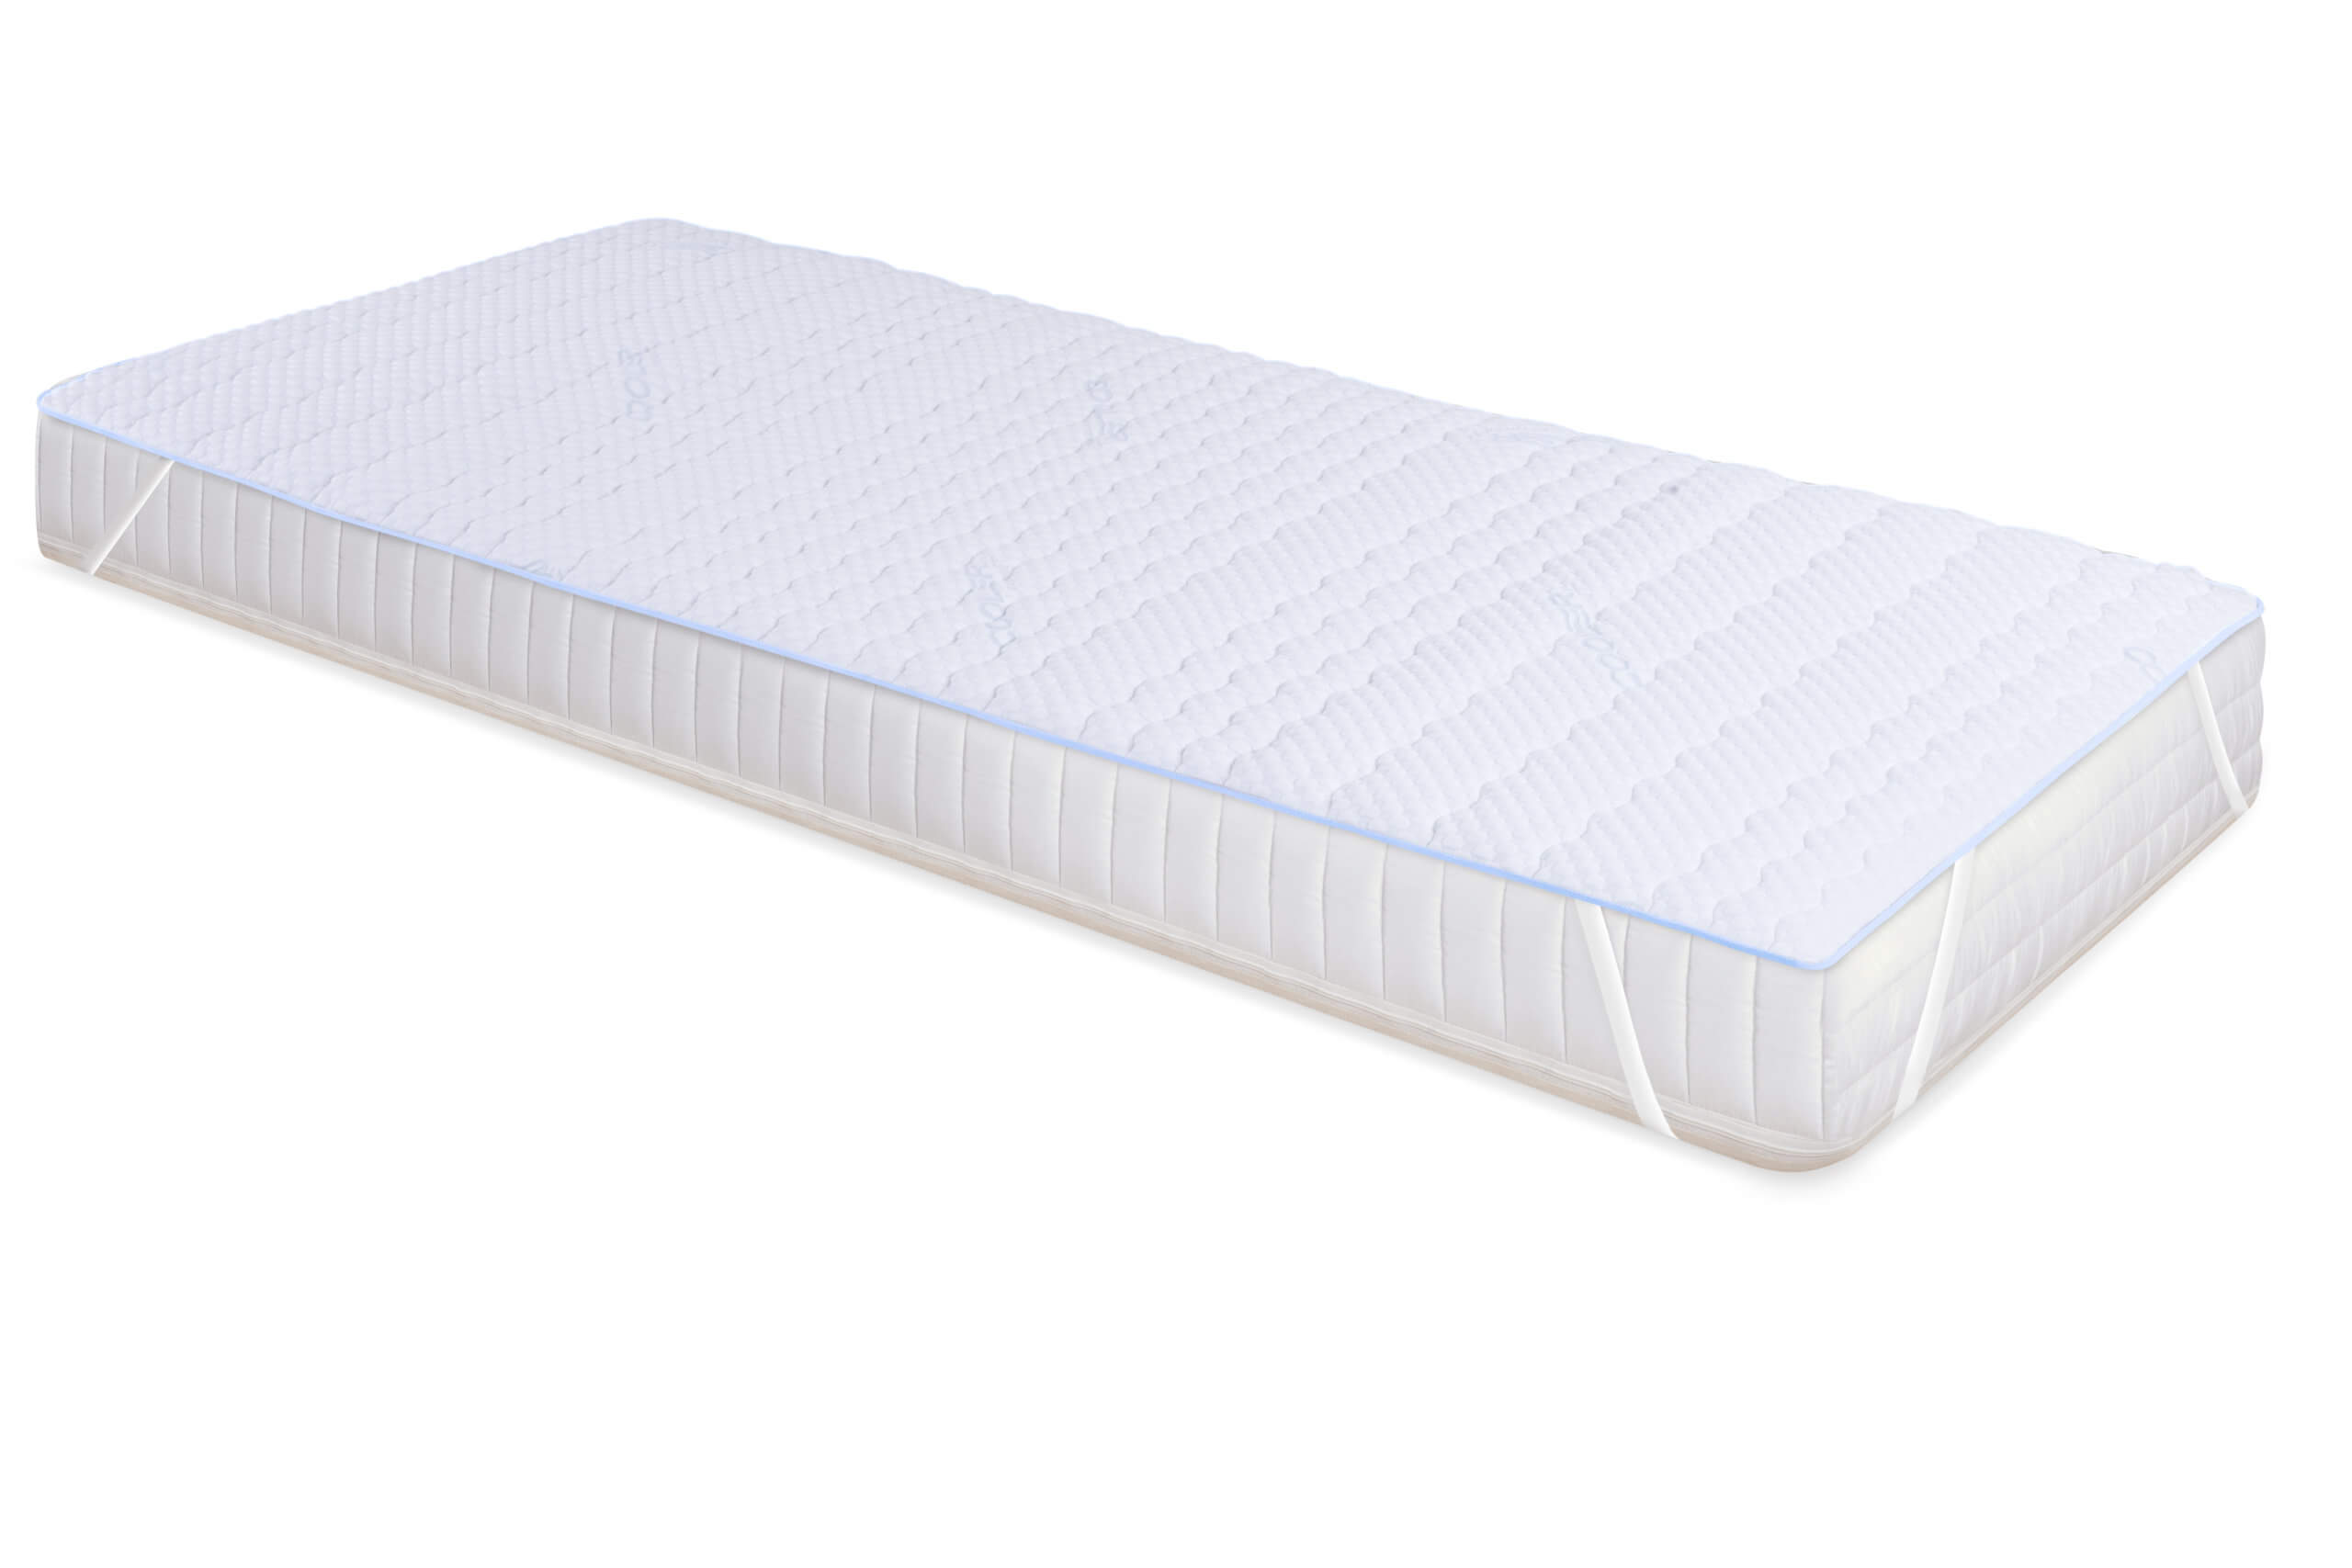 Practical mattress protector